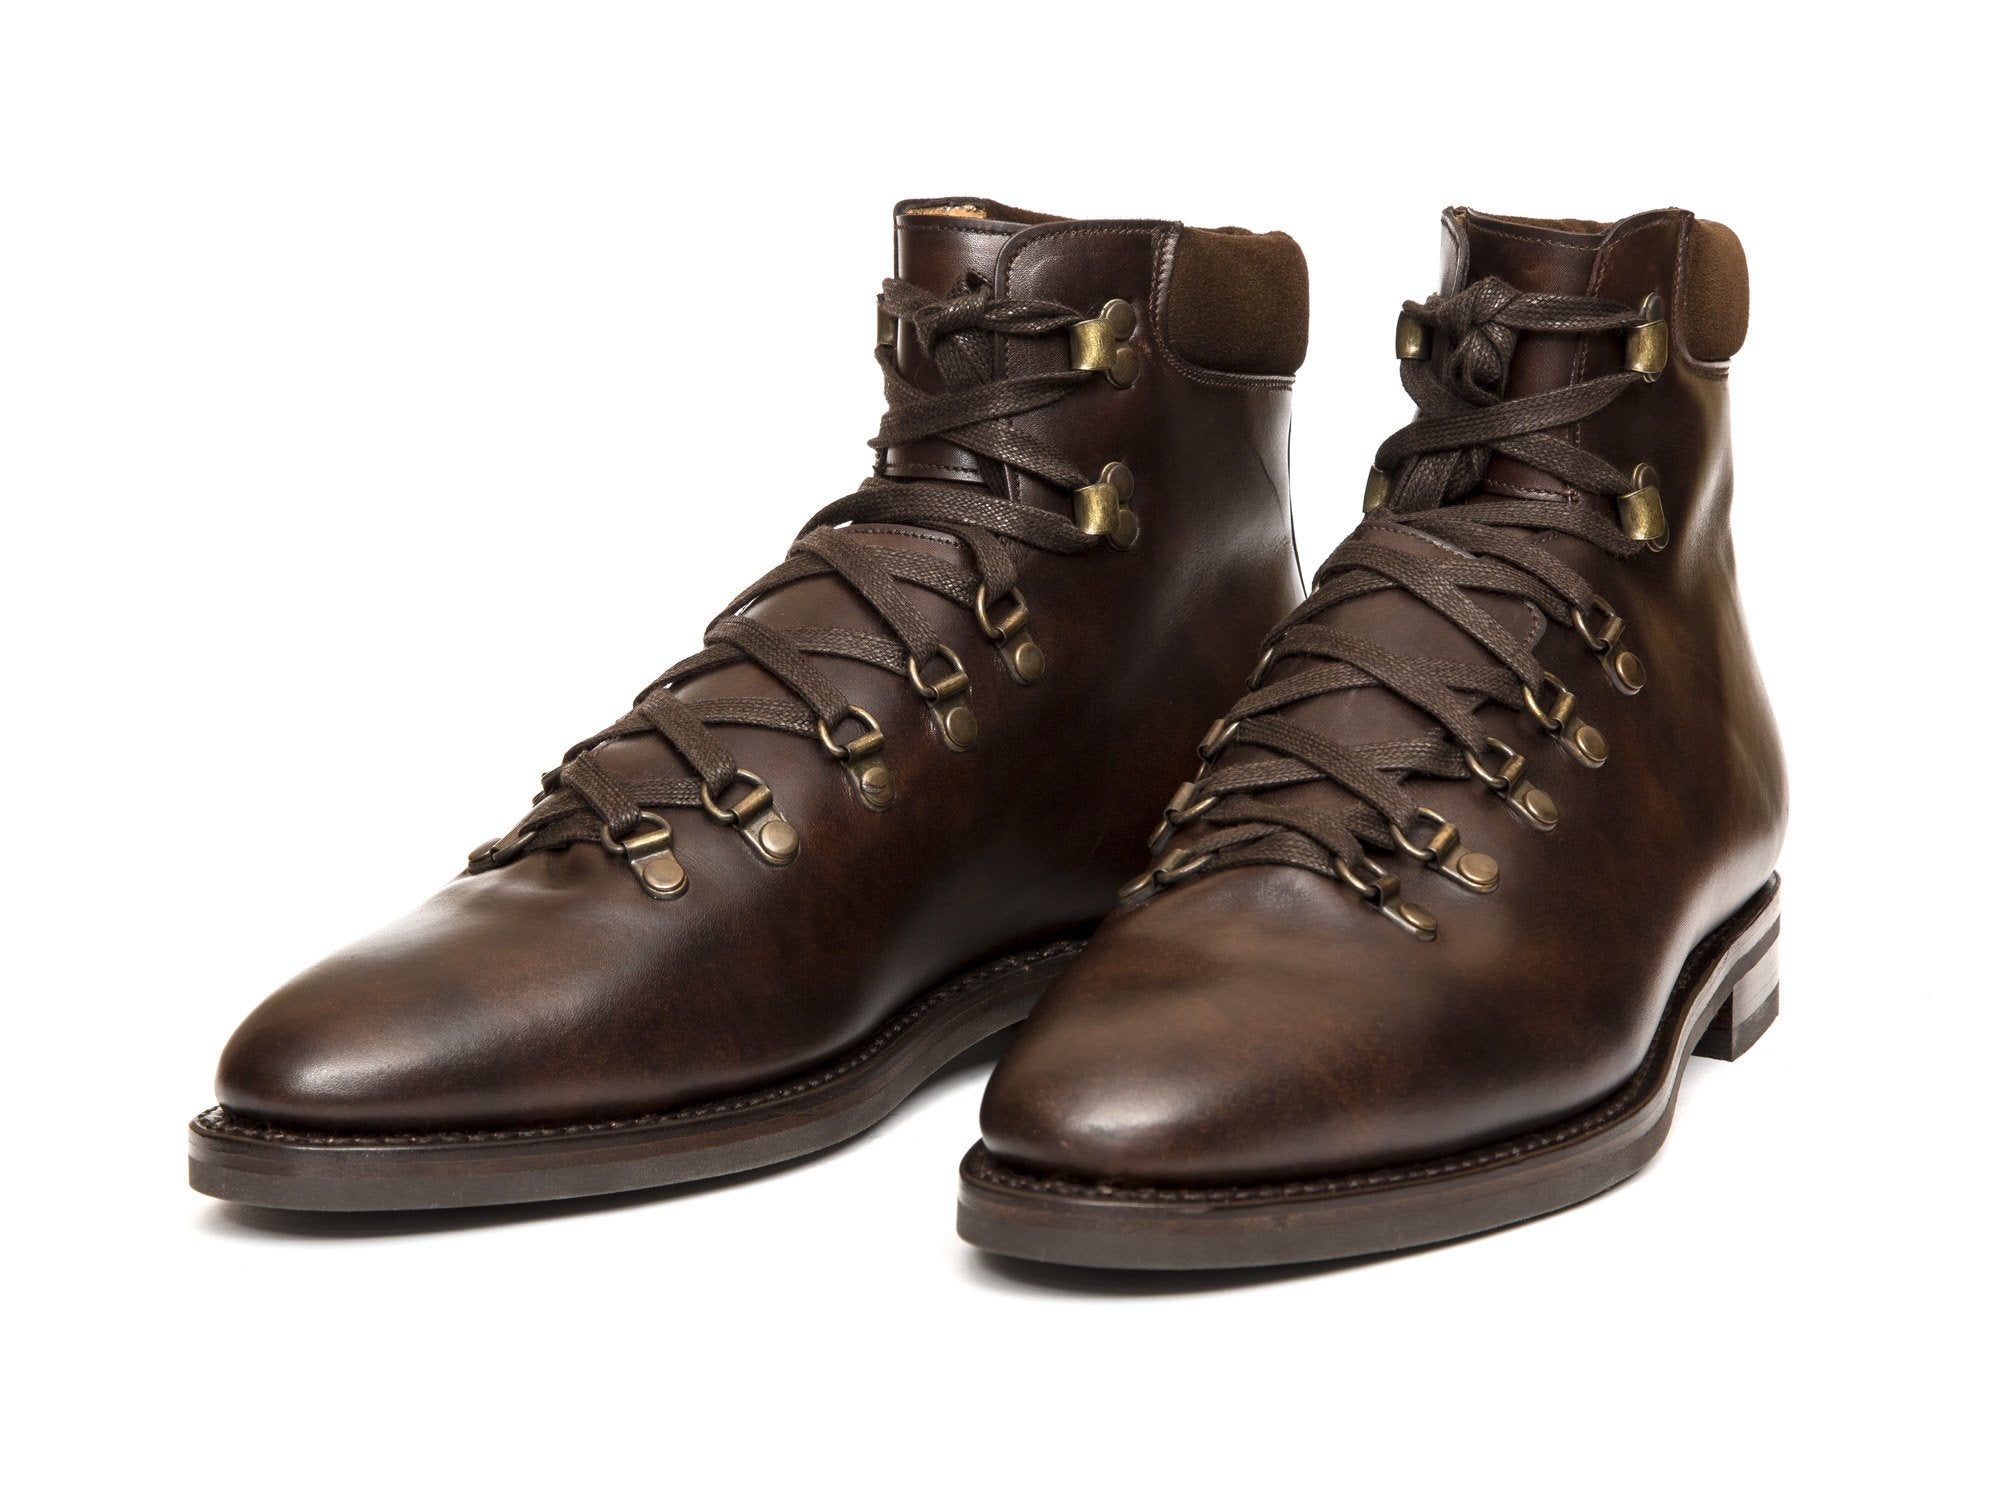 J.FitzPatrick Footwear - Snoqualmie - Dark Brown Museum Calf - City Rubber Sole - TMG Last